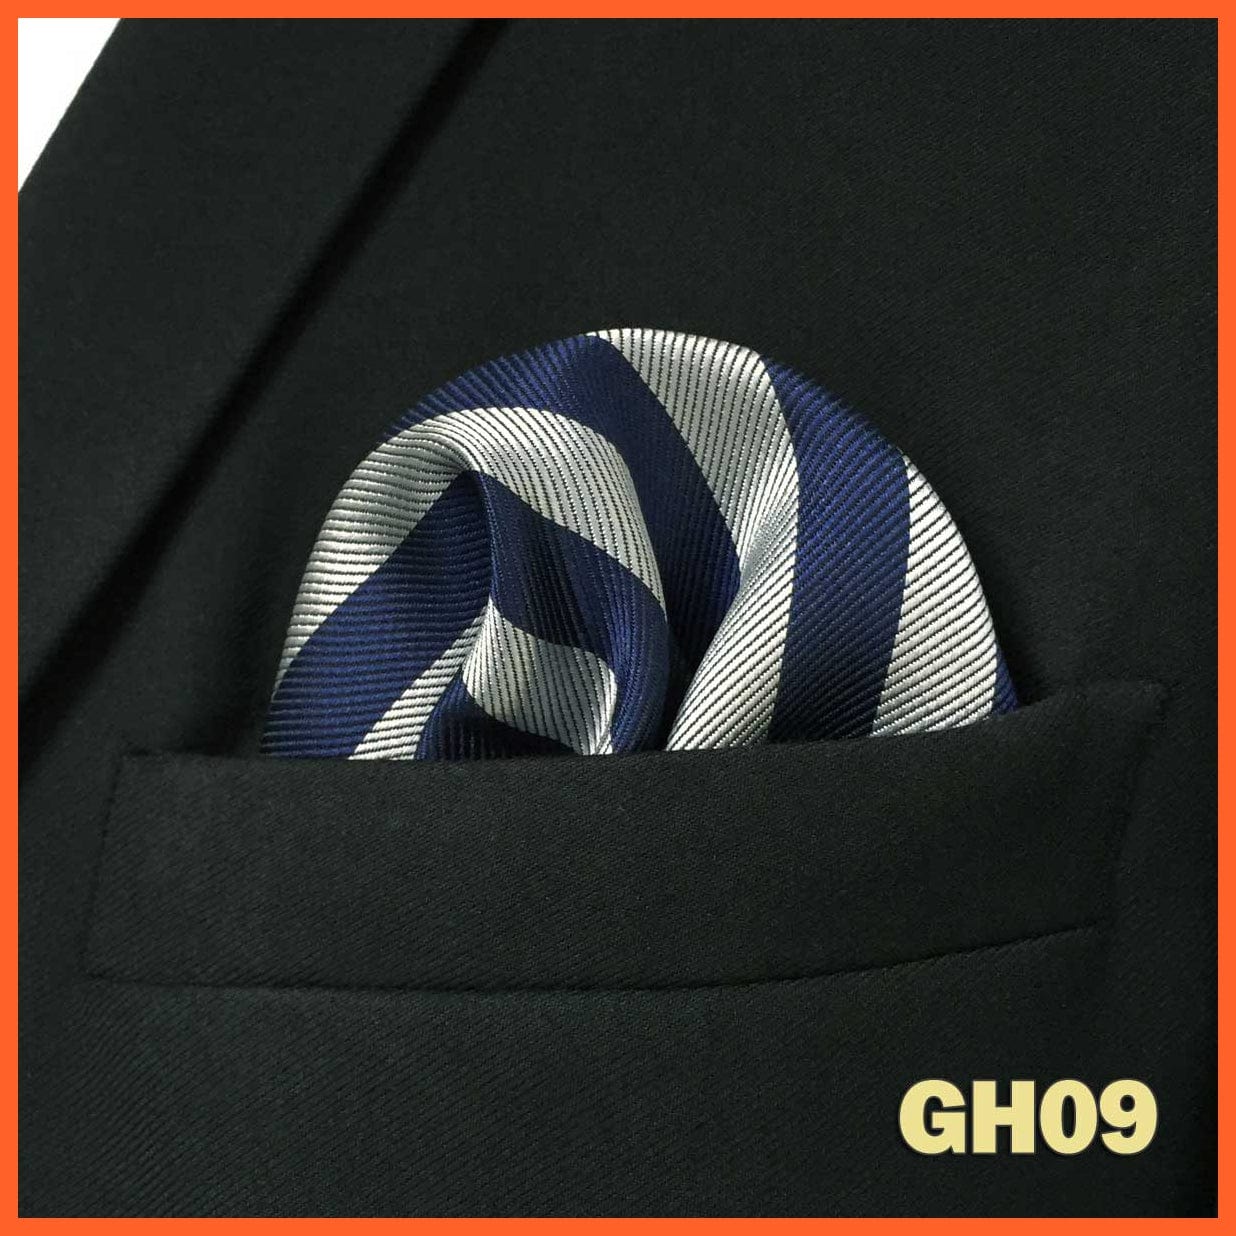 whatagift.com.au Handkerchief GH09 Colorful Multicolor Pocket Square Men's Classic Striped Handkerchief